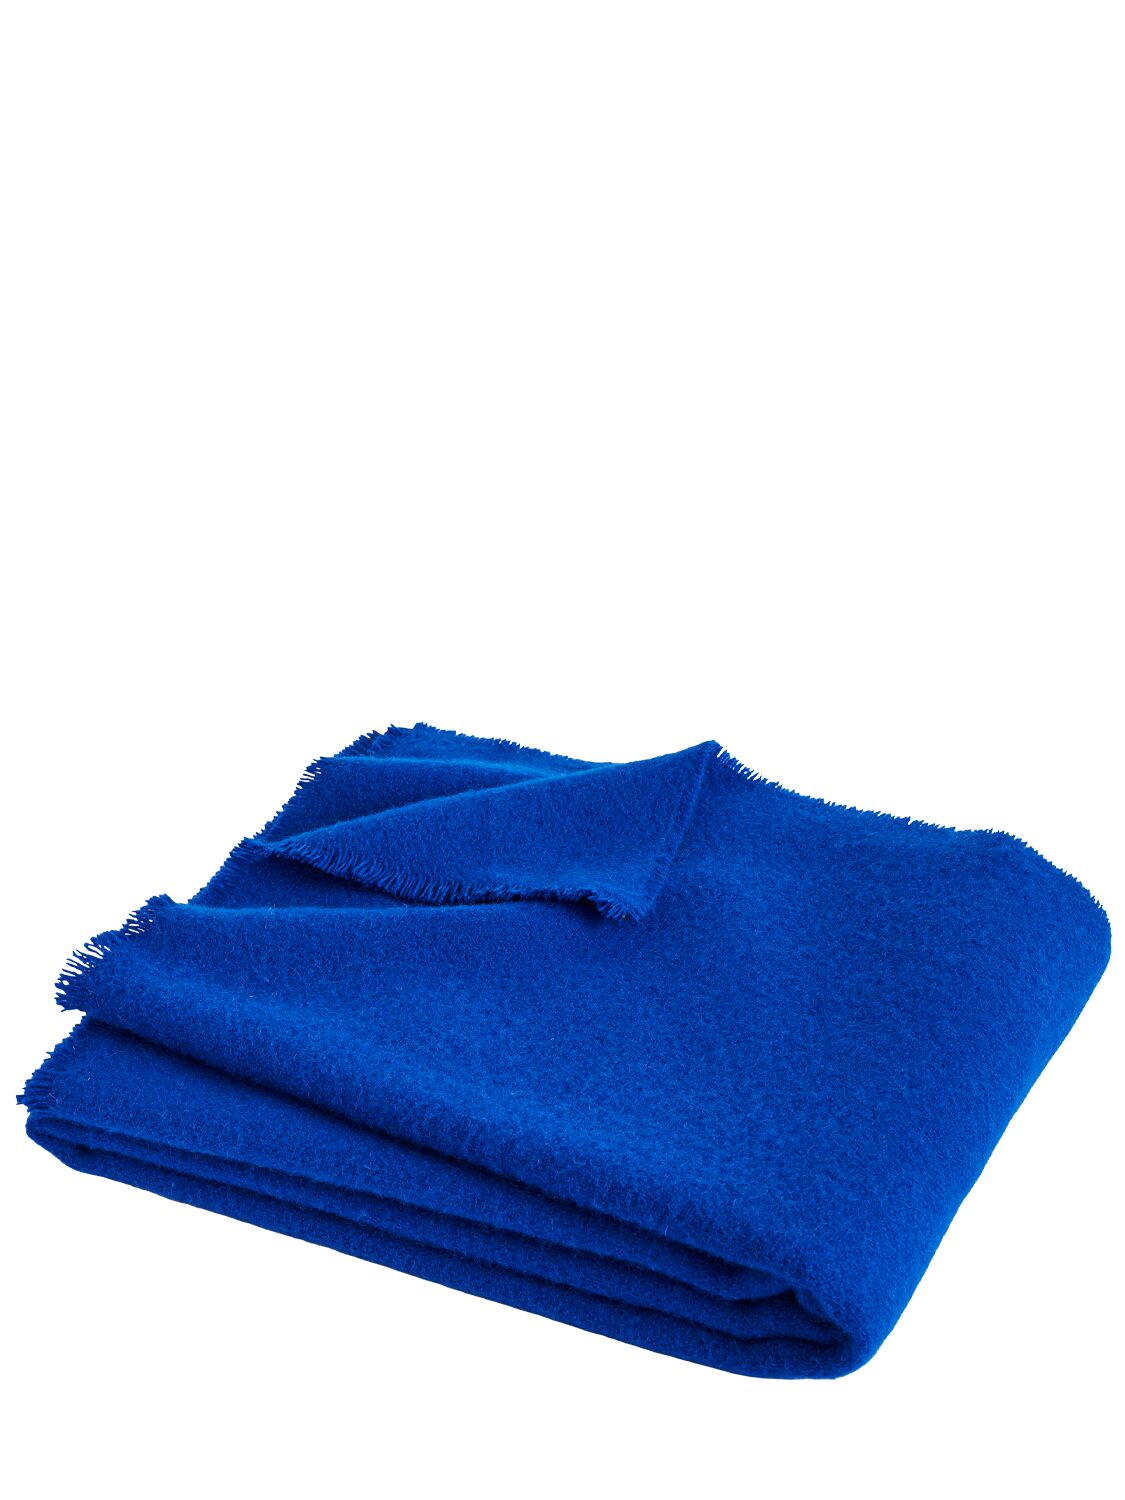 Hay Ultramarine Mono Blanket In Blue